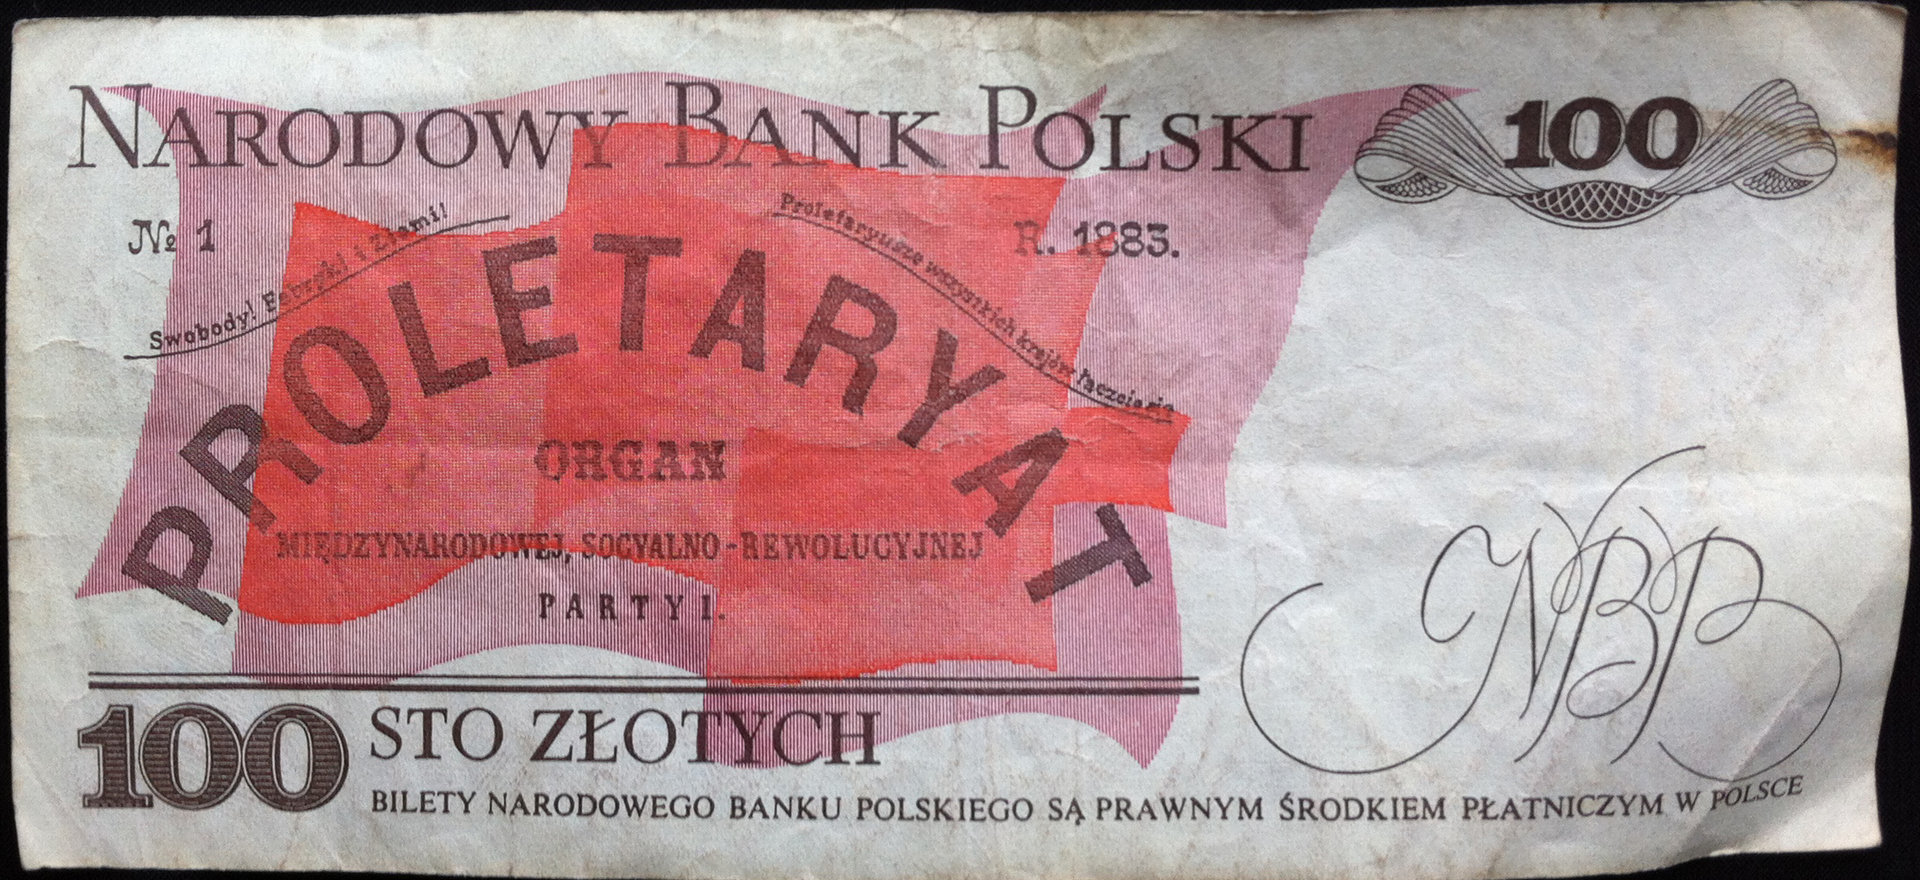 1988-Narodowy-Bank-Polski-100-Sto-Zlotych-Re_02.jpg